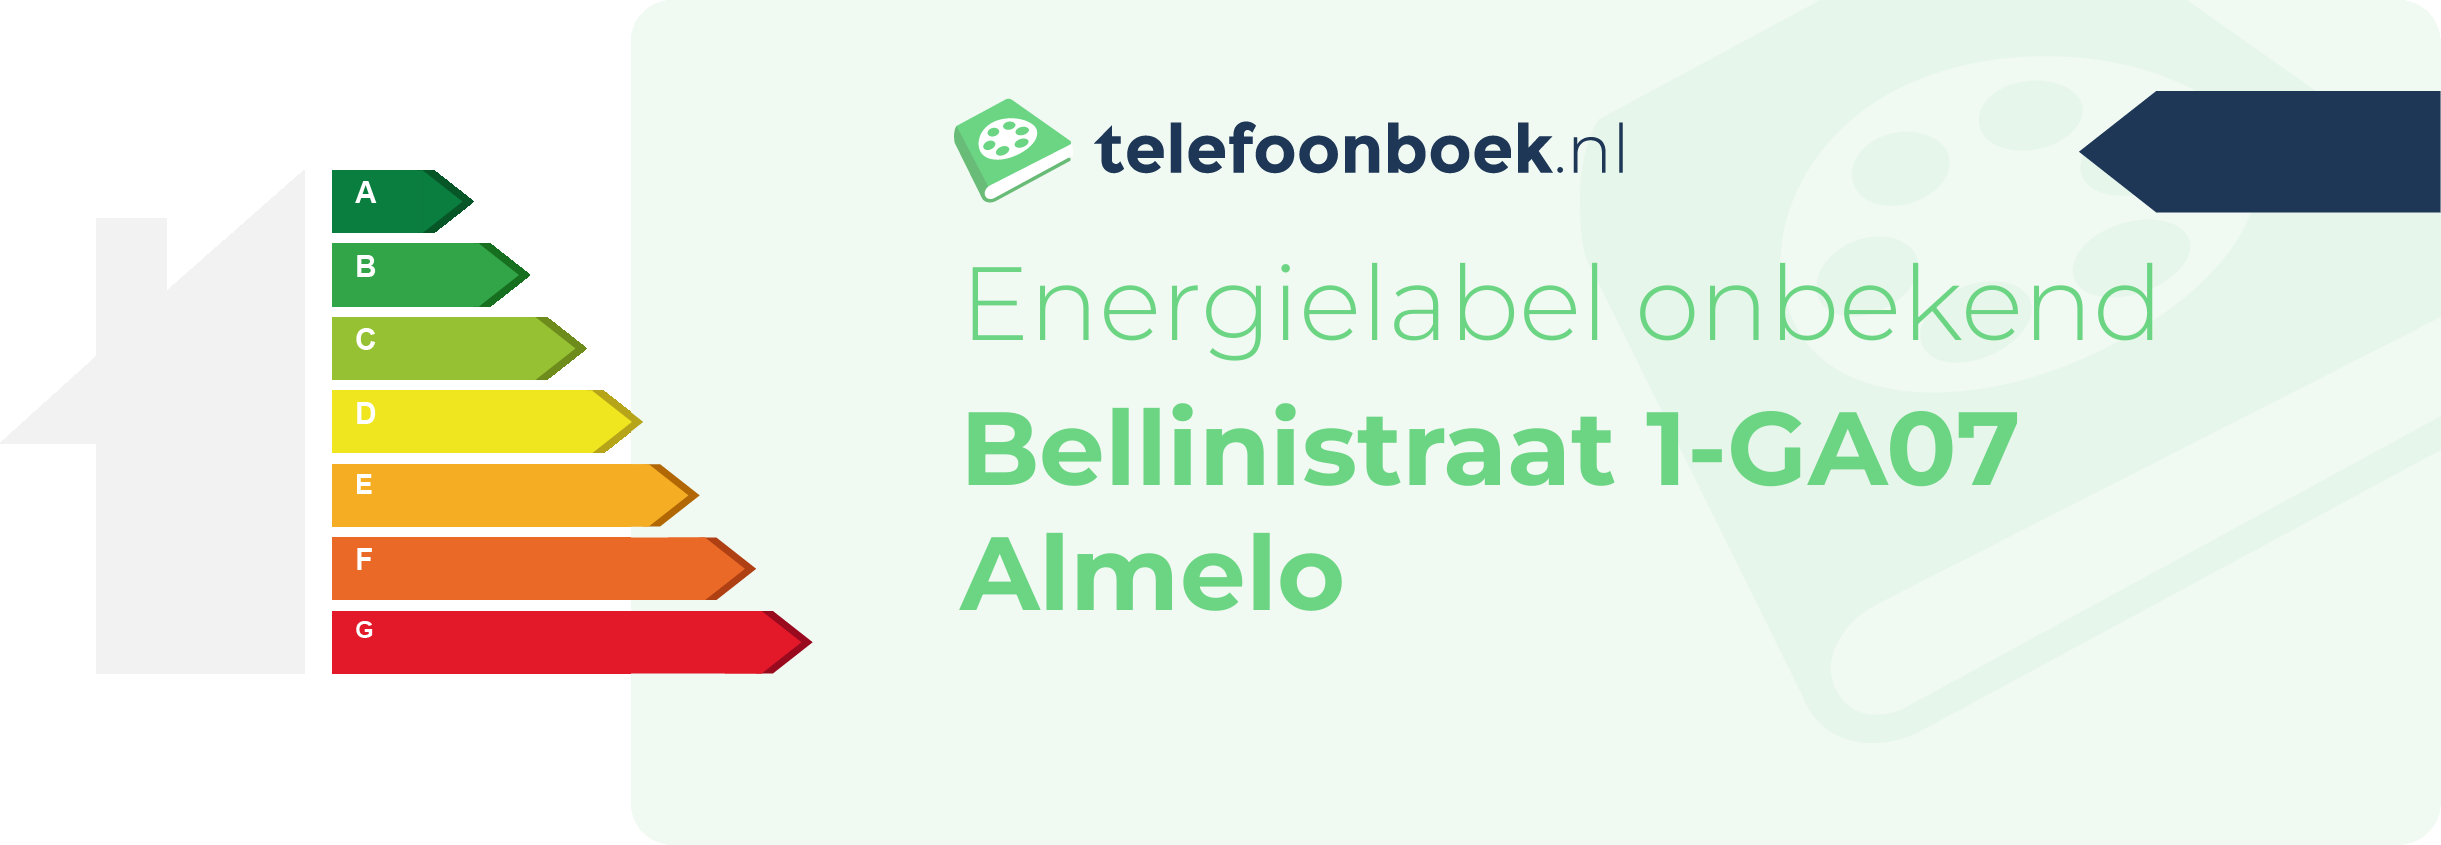 Energielabel Bellinistraat 1-GA07 Almelo